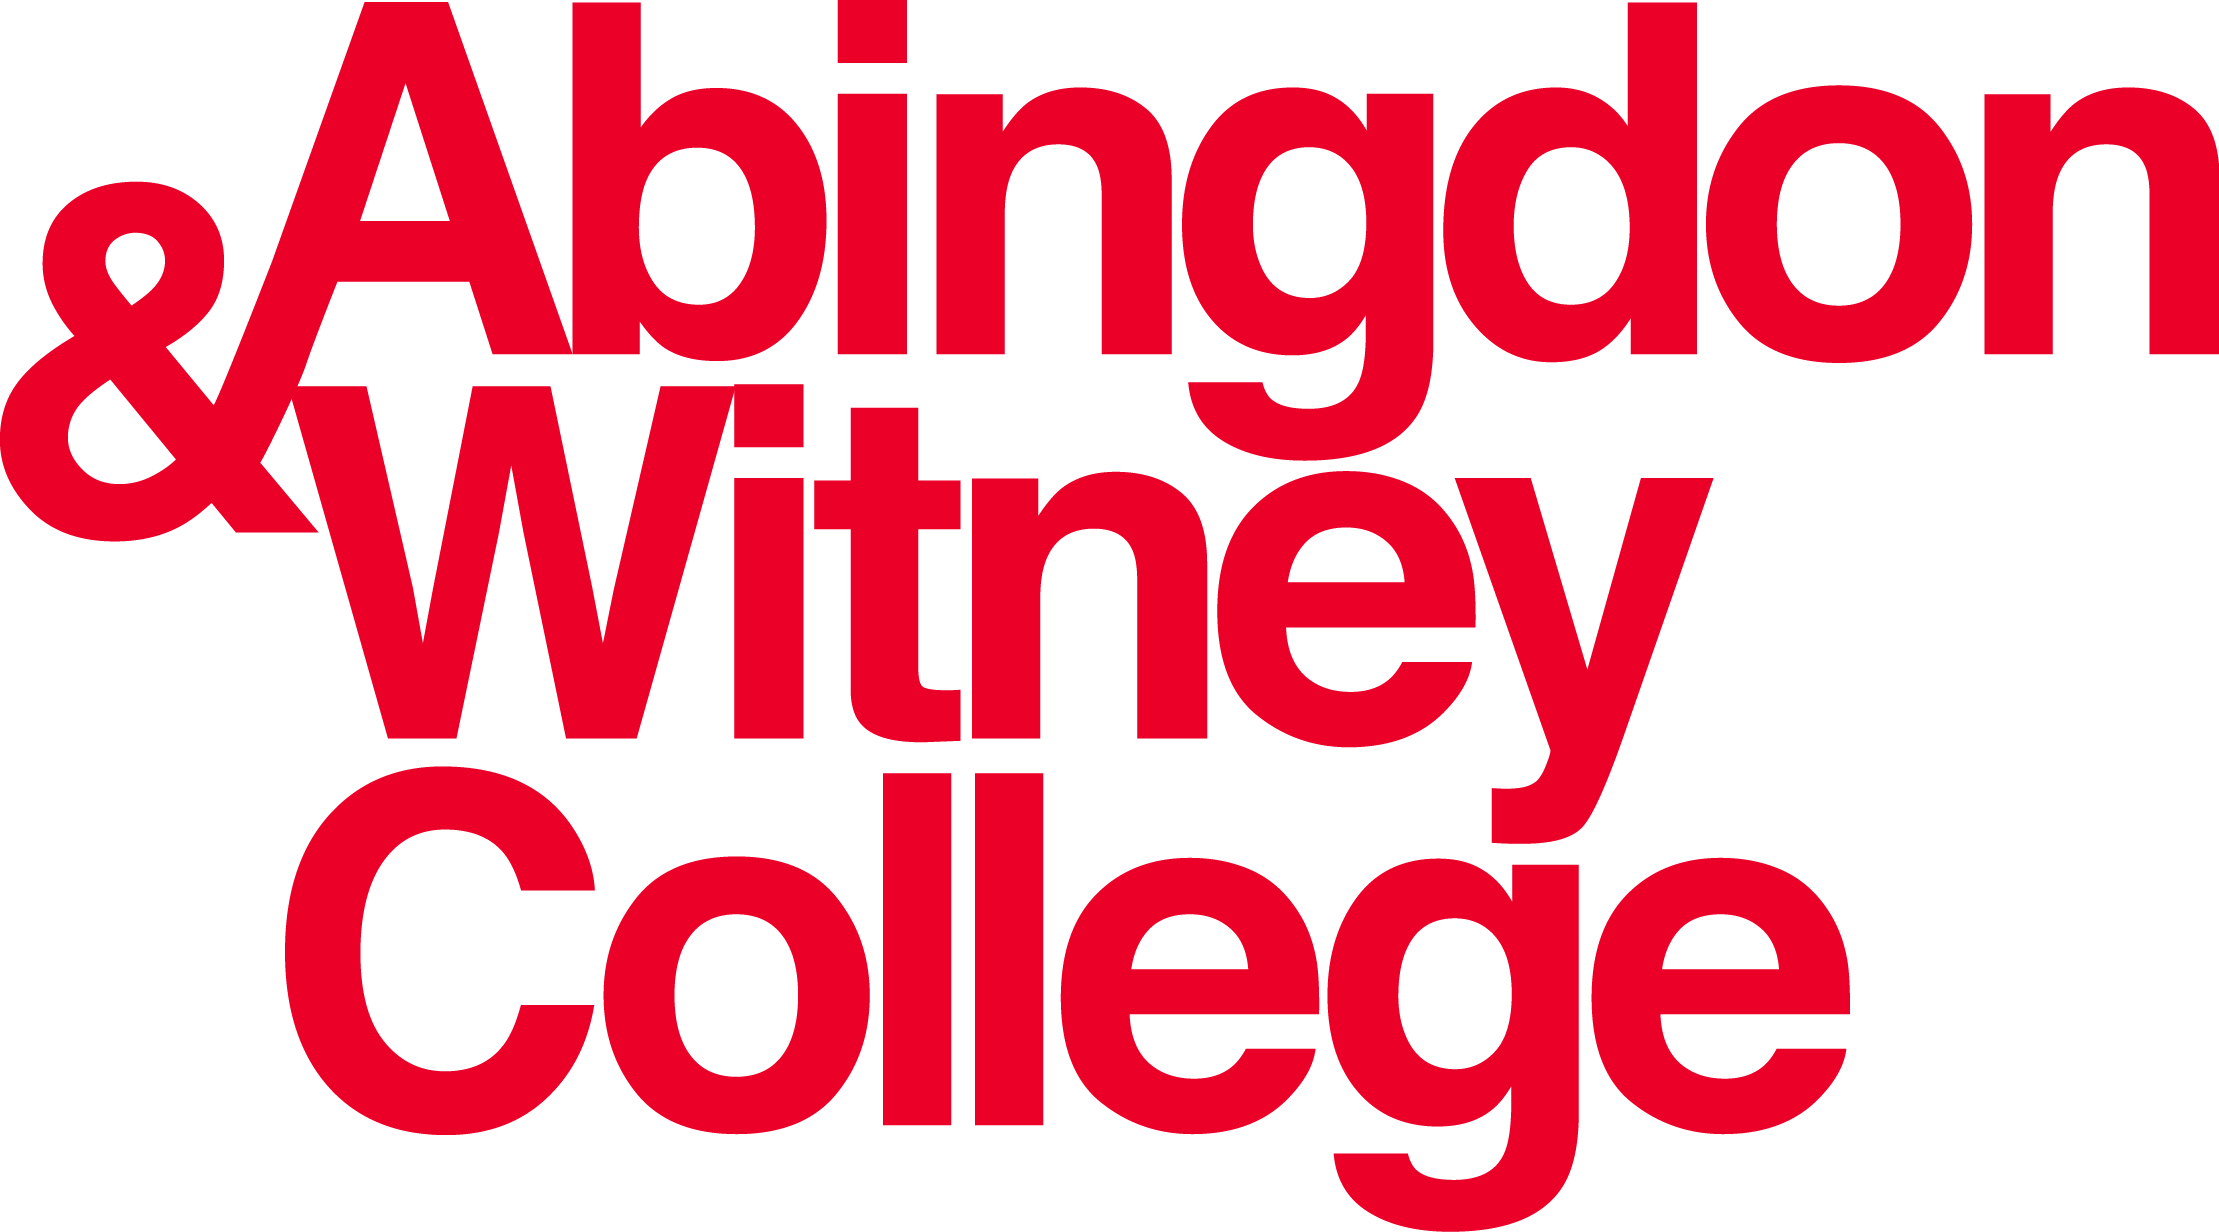 Abingdon & Witney College logo